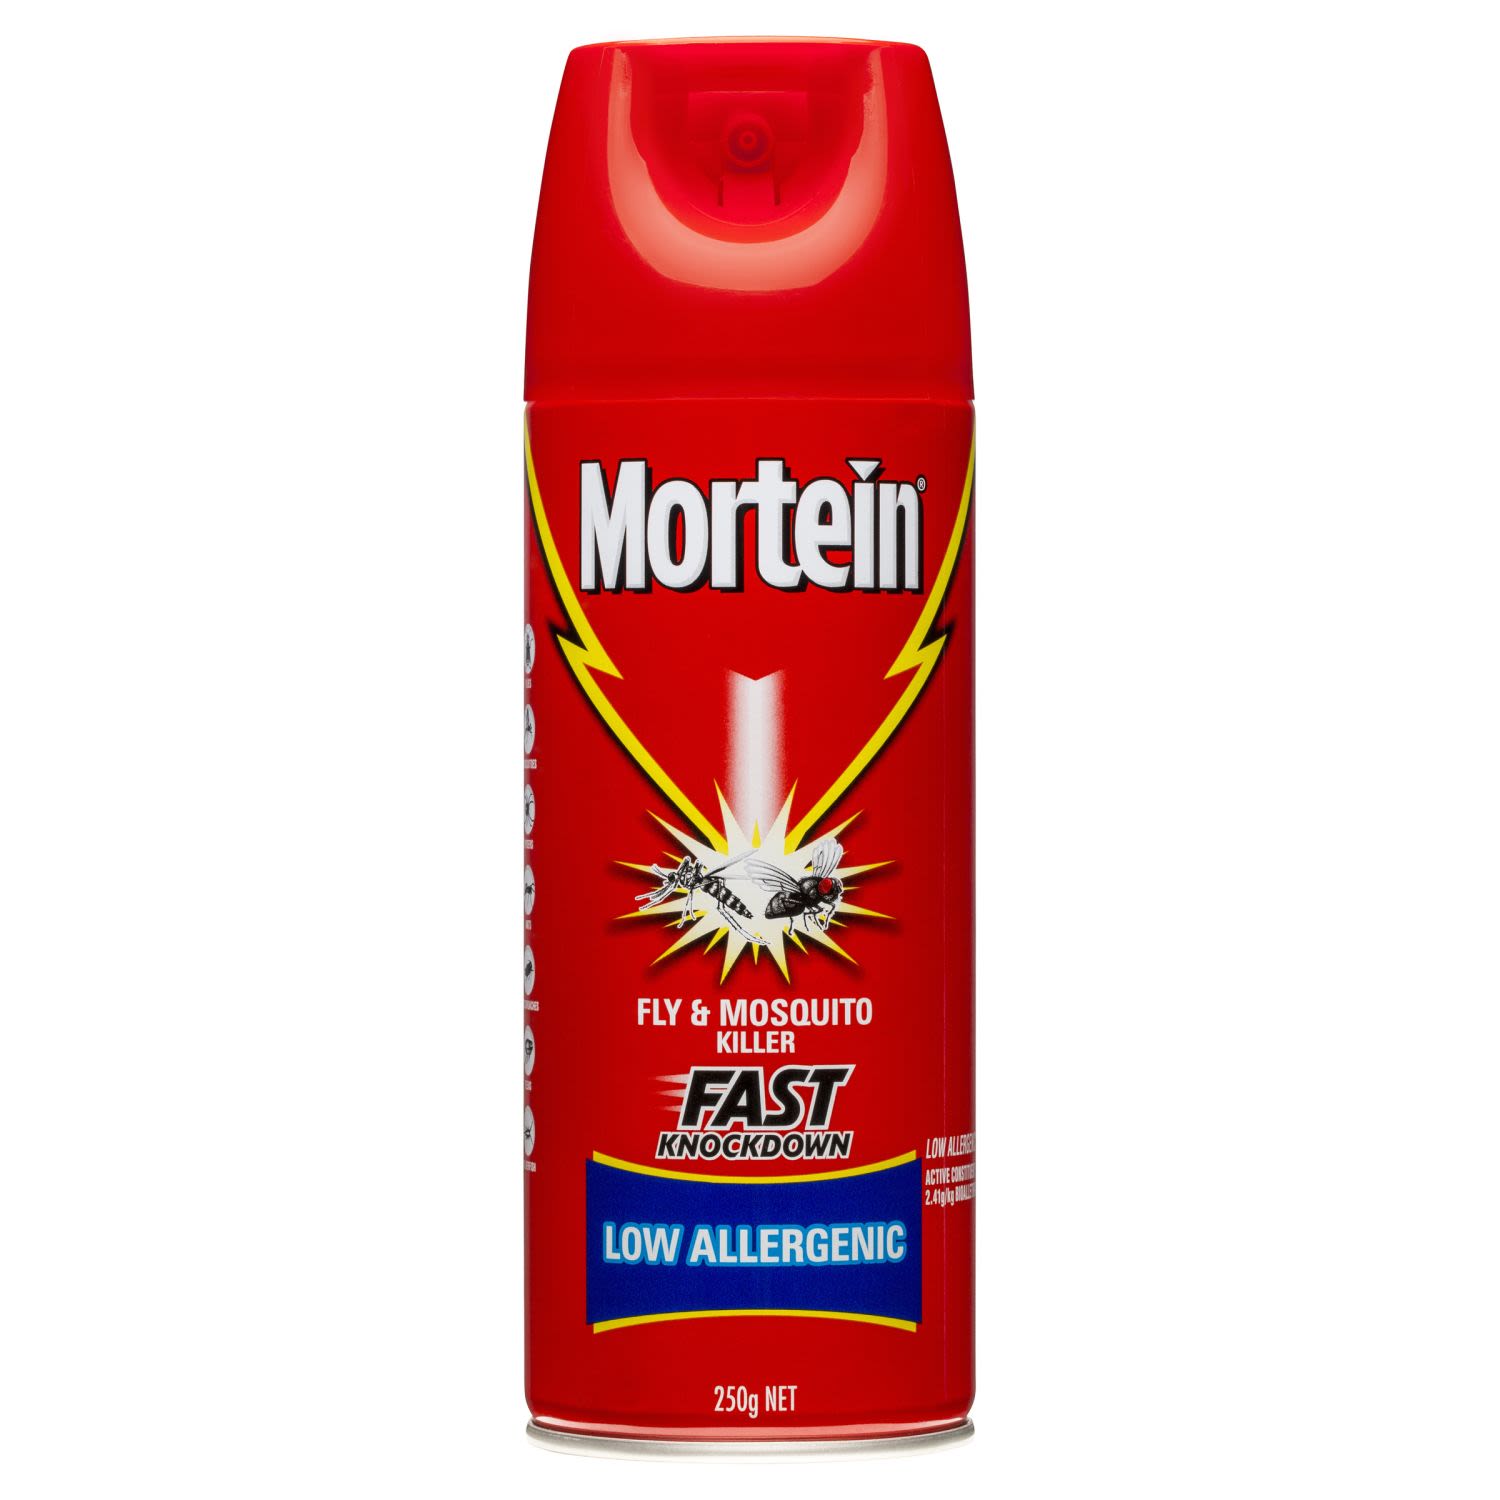 Mortein Fast Knockdown Low Allergenic Fly & Mosquito Killer Aerosol, 250 Gram